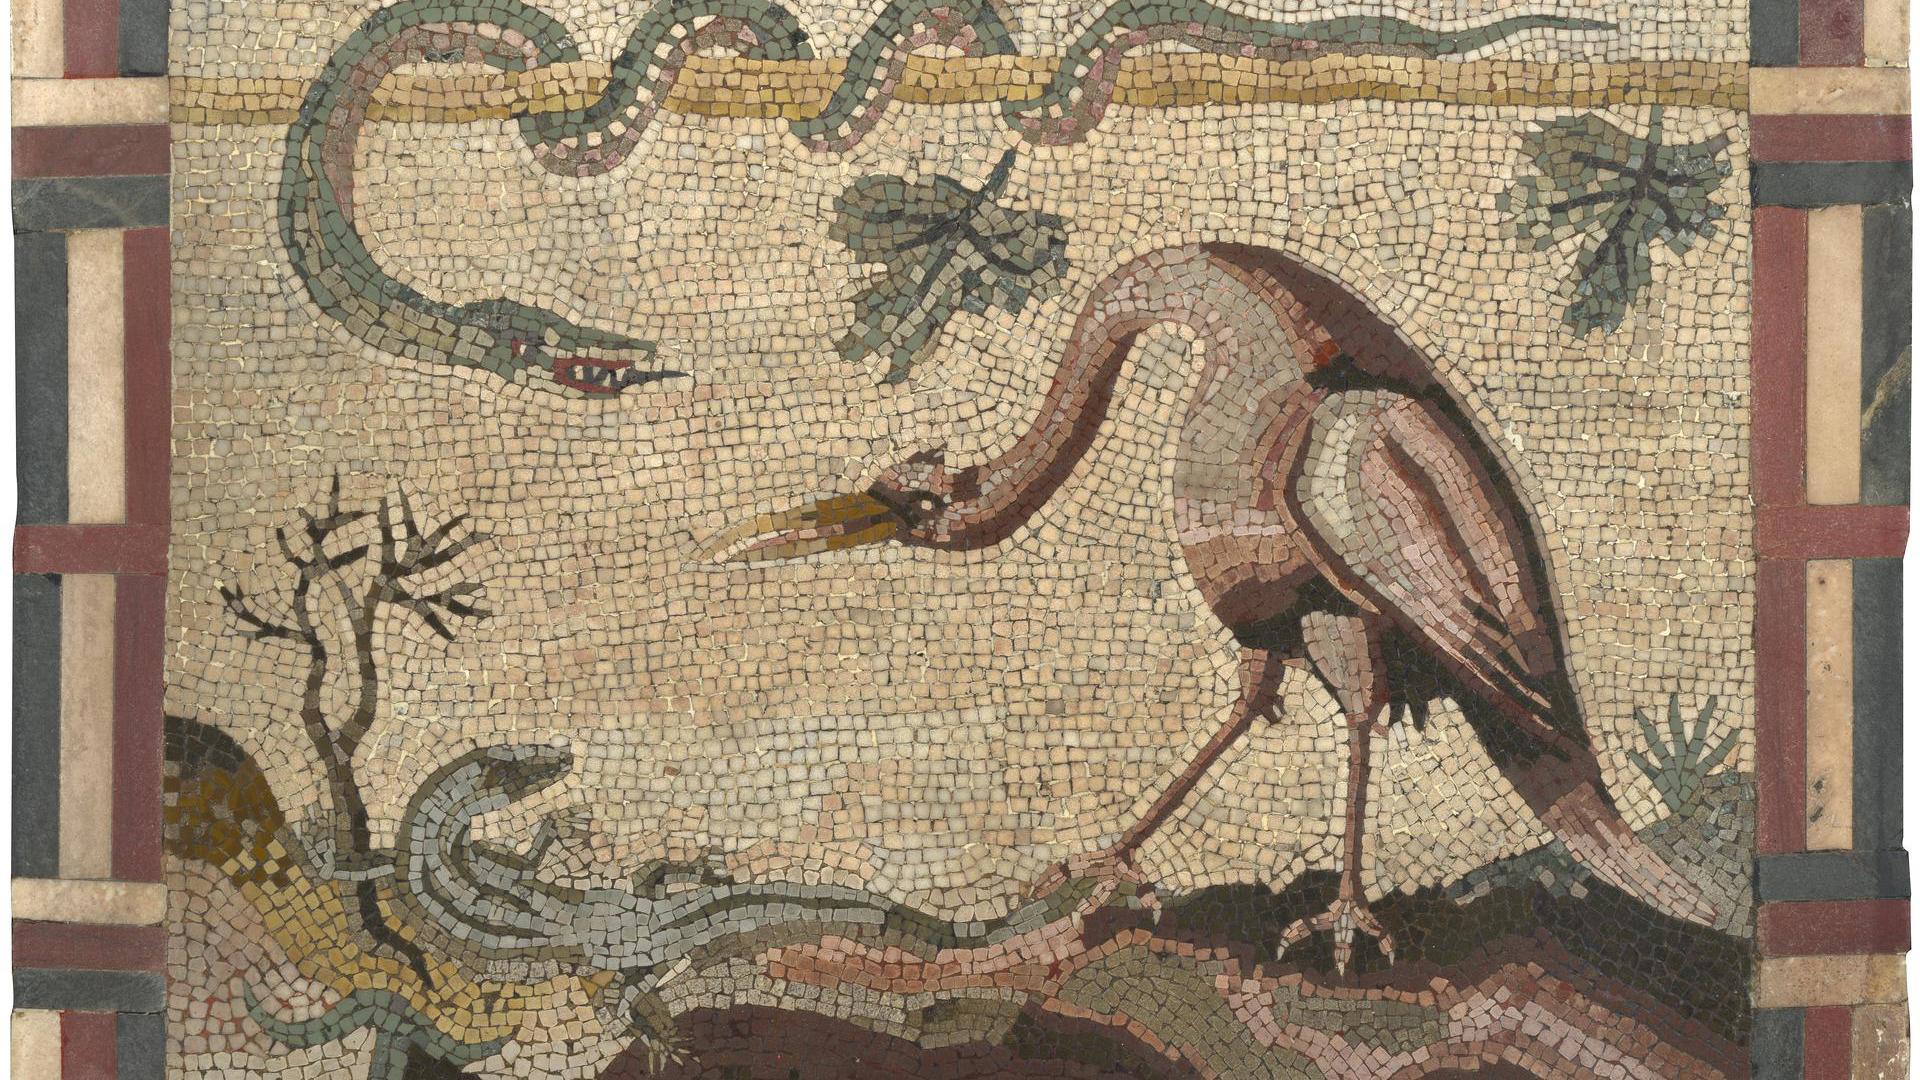 Crane, Python and Lizard by Italian, Roman